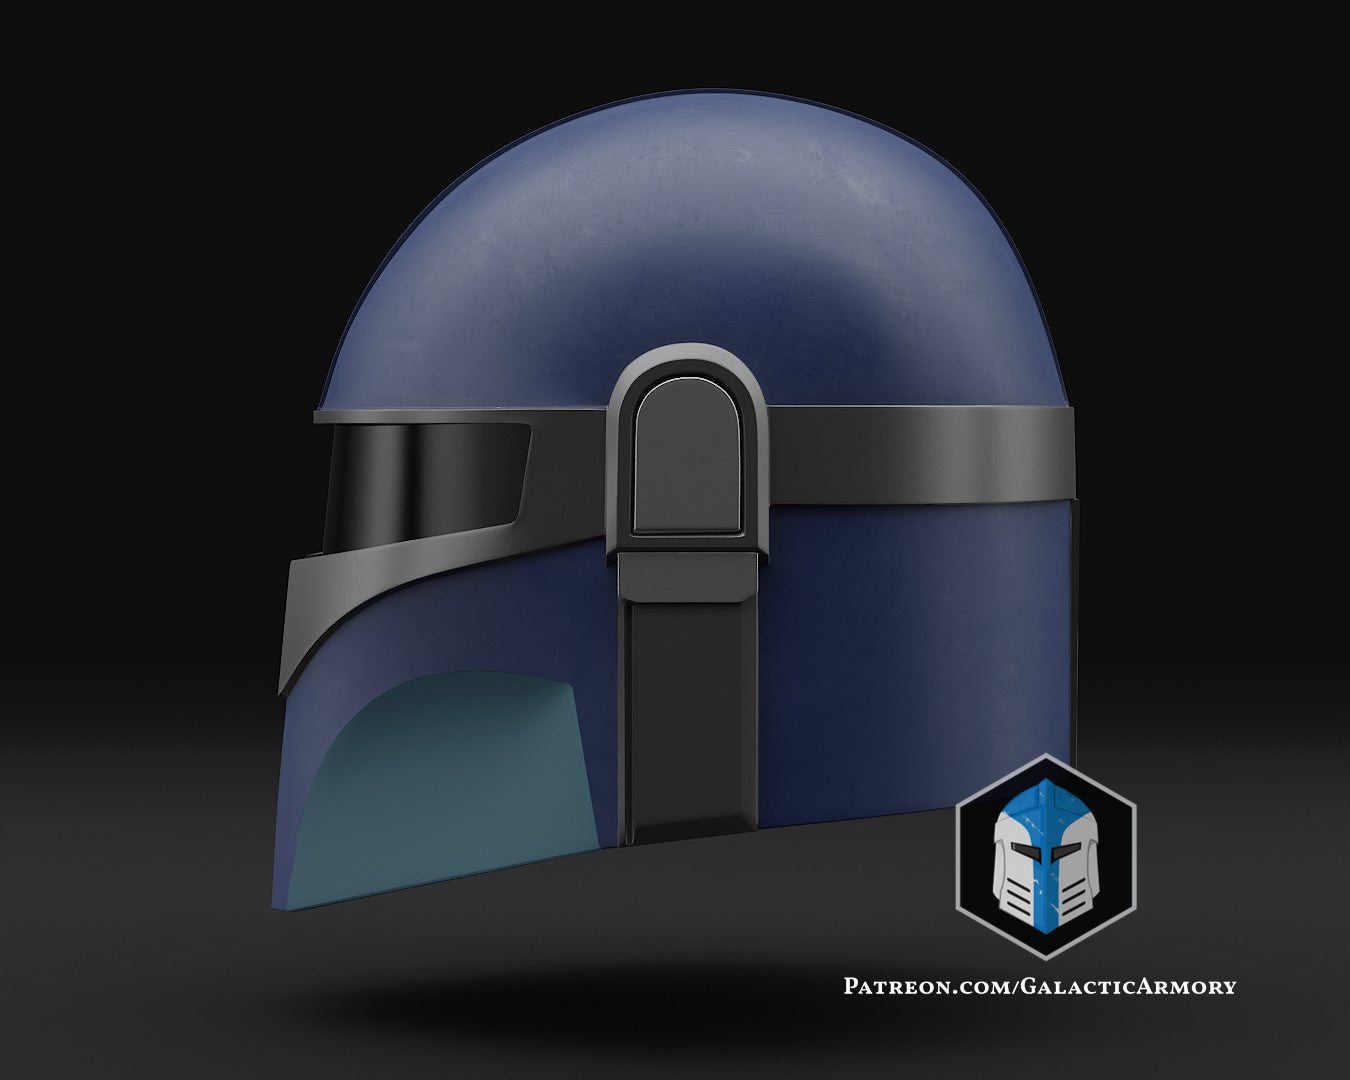 Mandalorian Child Helmet - 3D Print Files